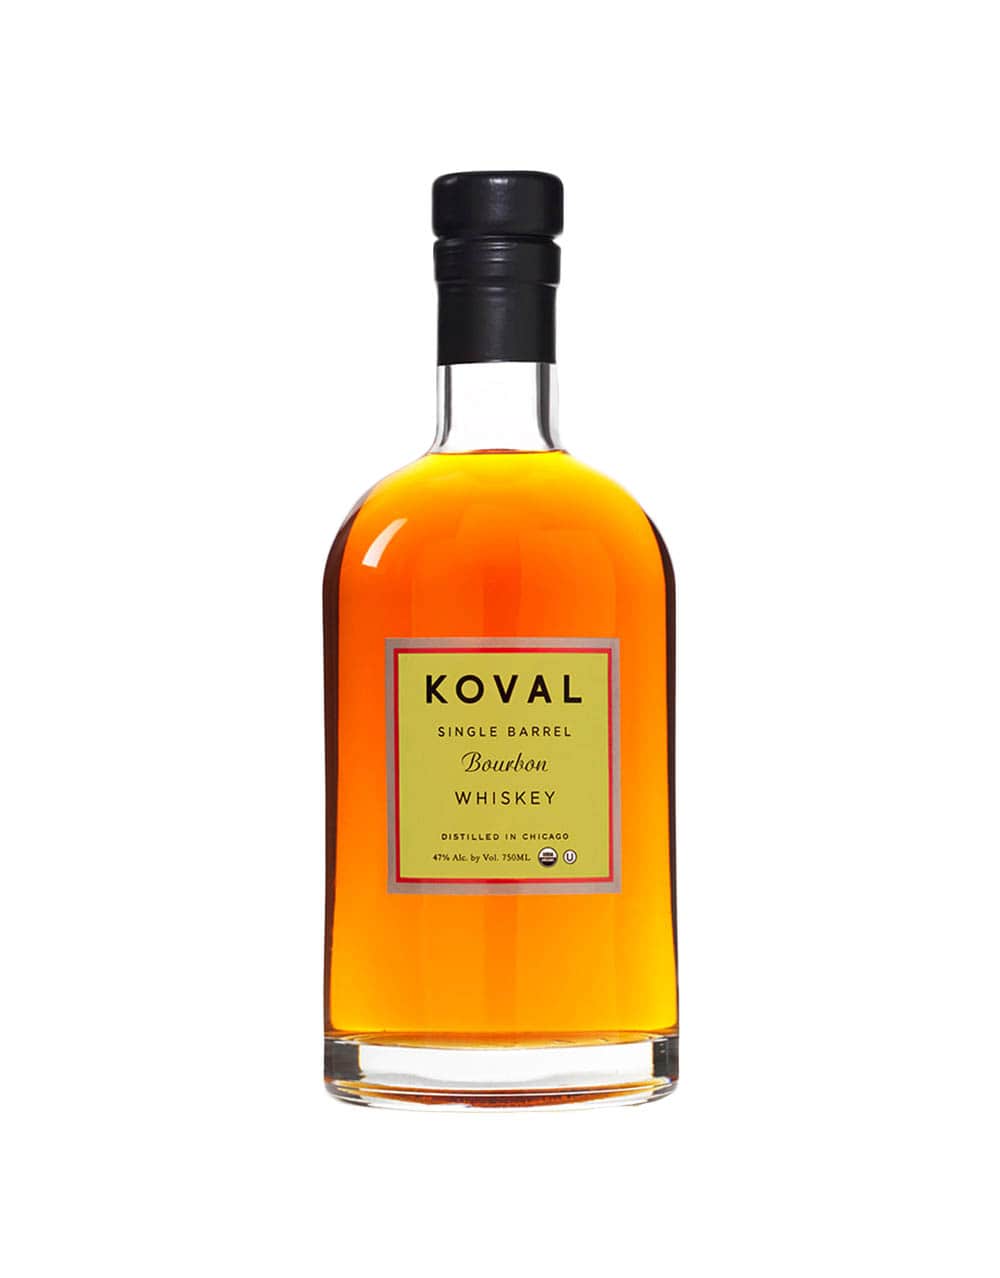 Koval Single Barrel Bourbon whiskey